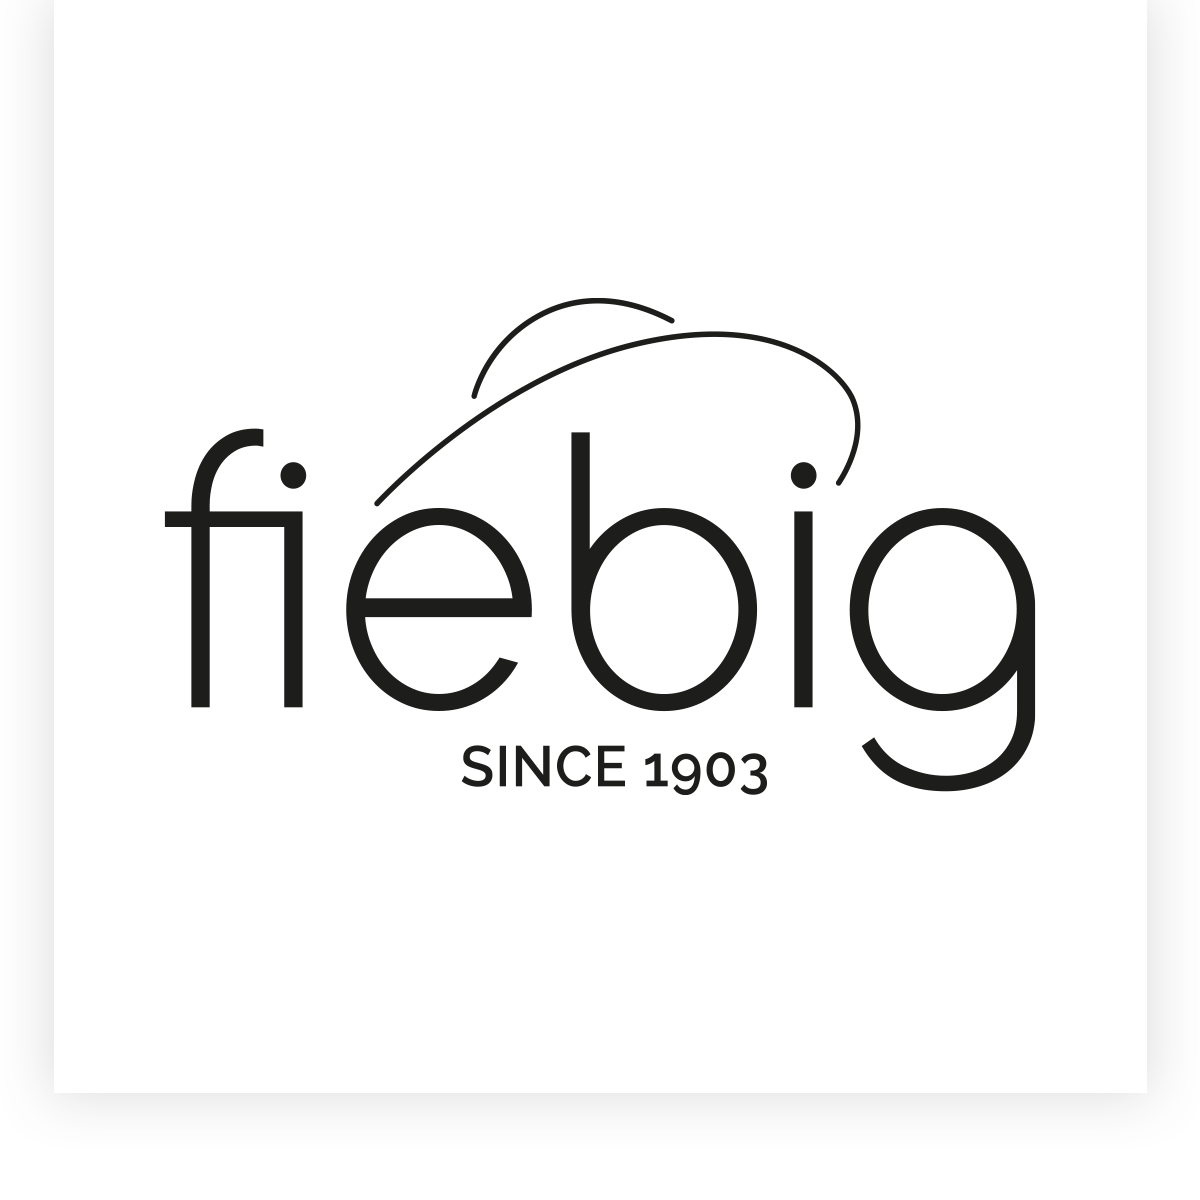 Fiebig since 1903